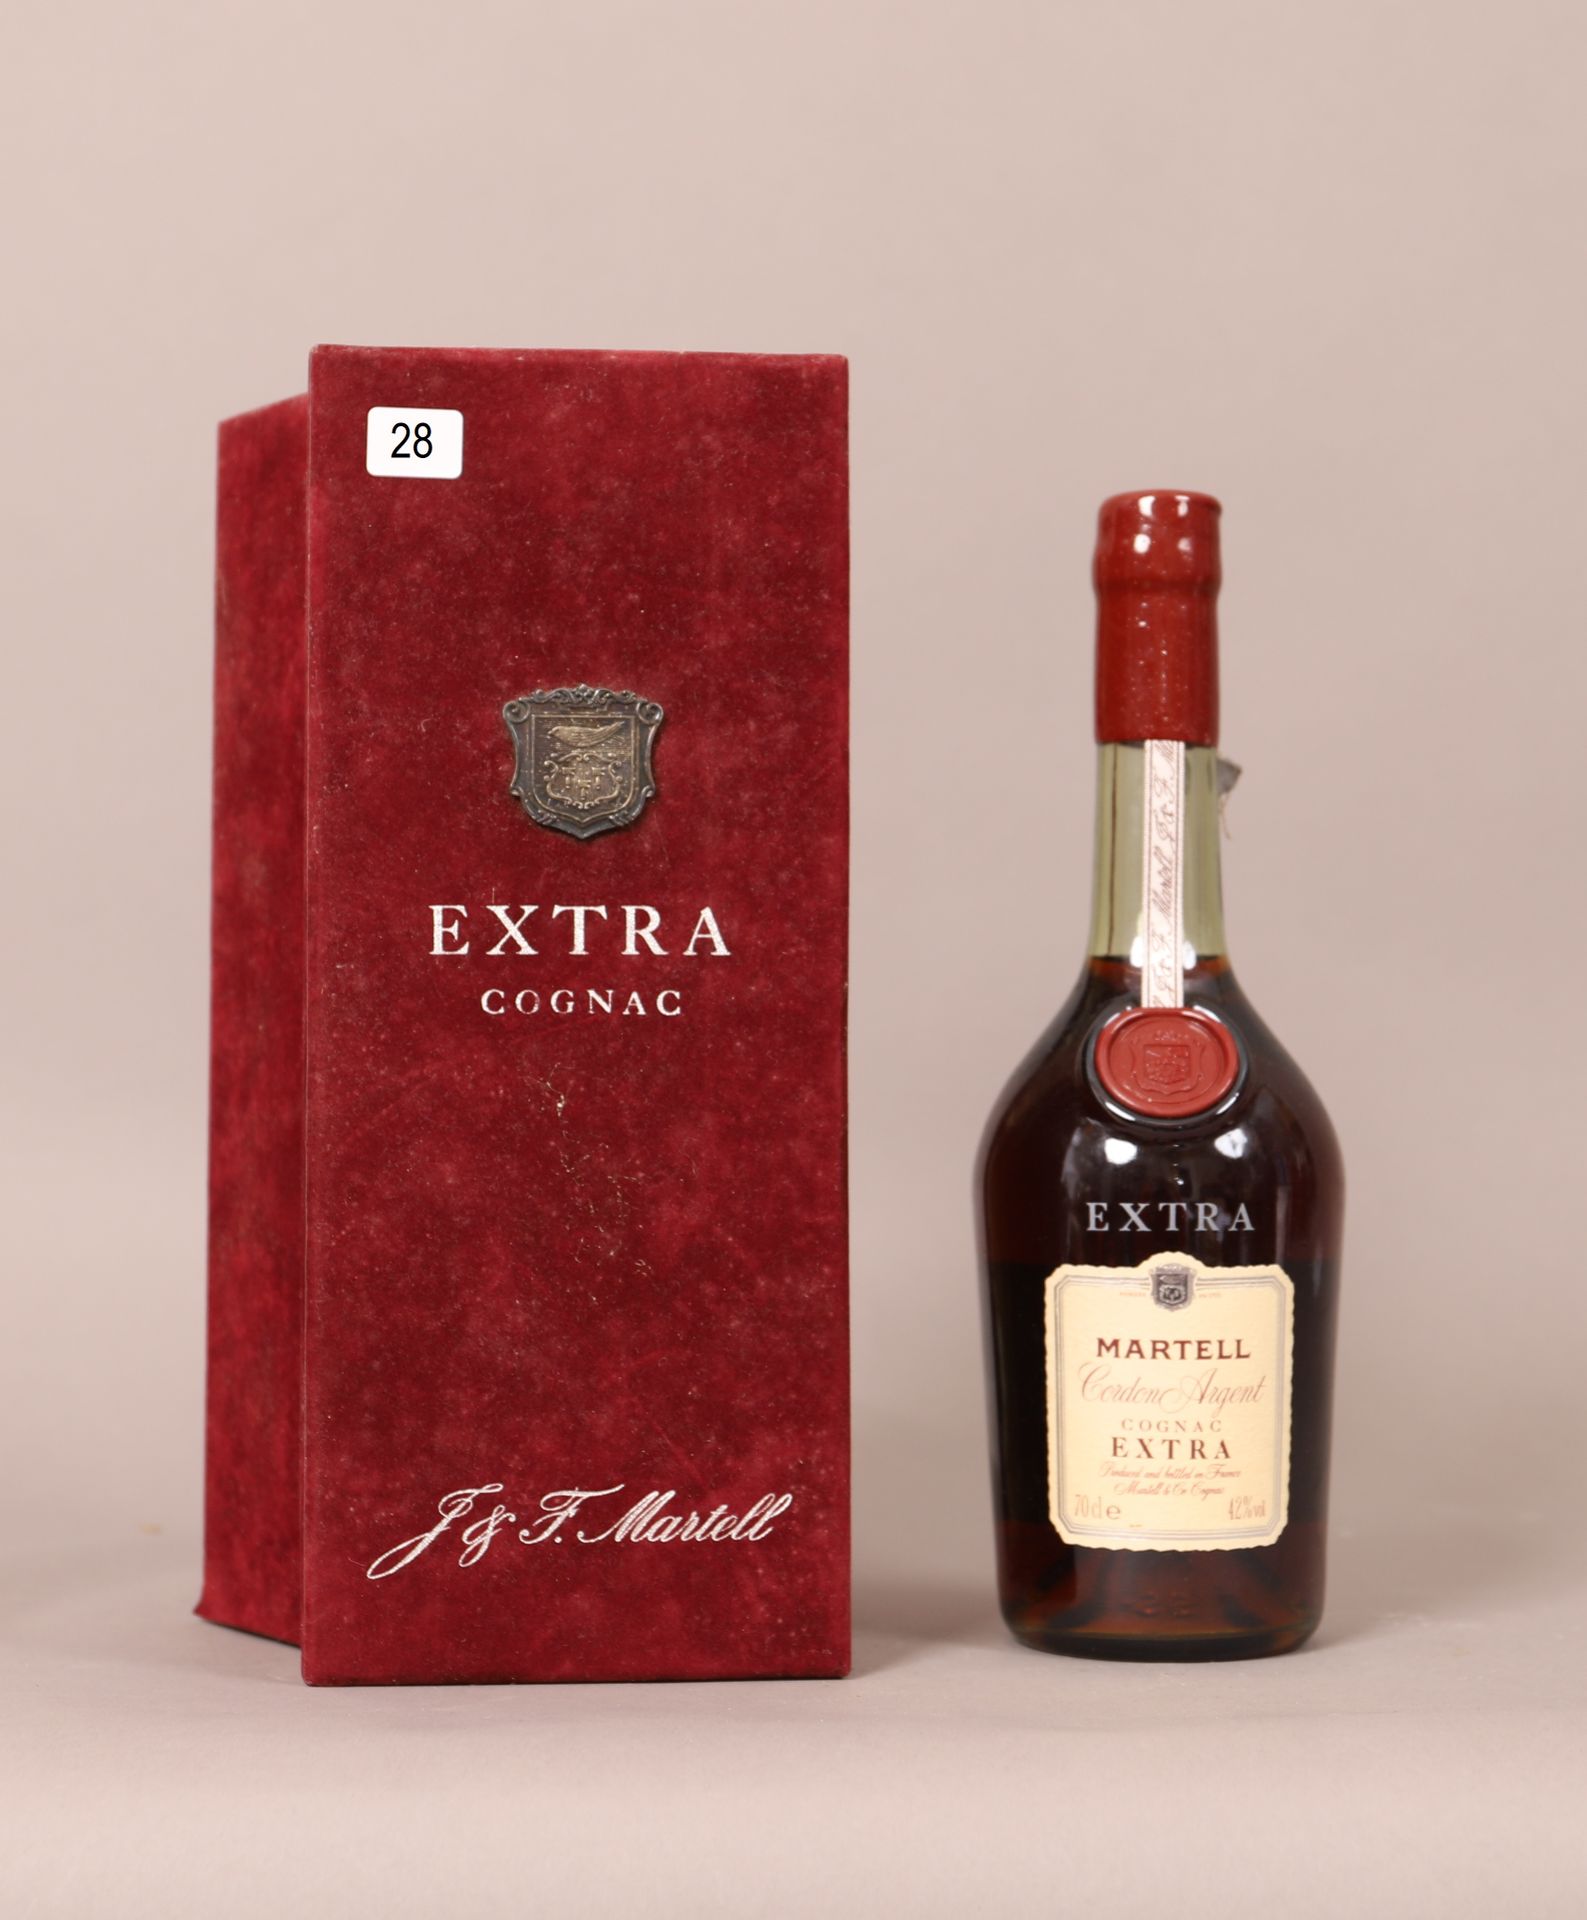 Null Cognac Extra (x1)

Martell

Cordone d'argento

0,70L